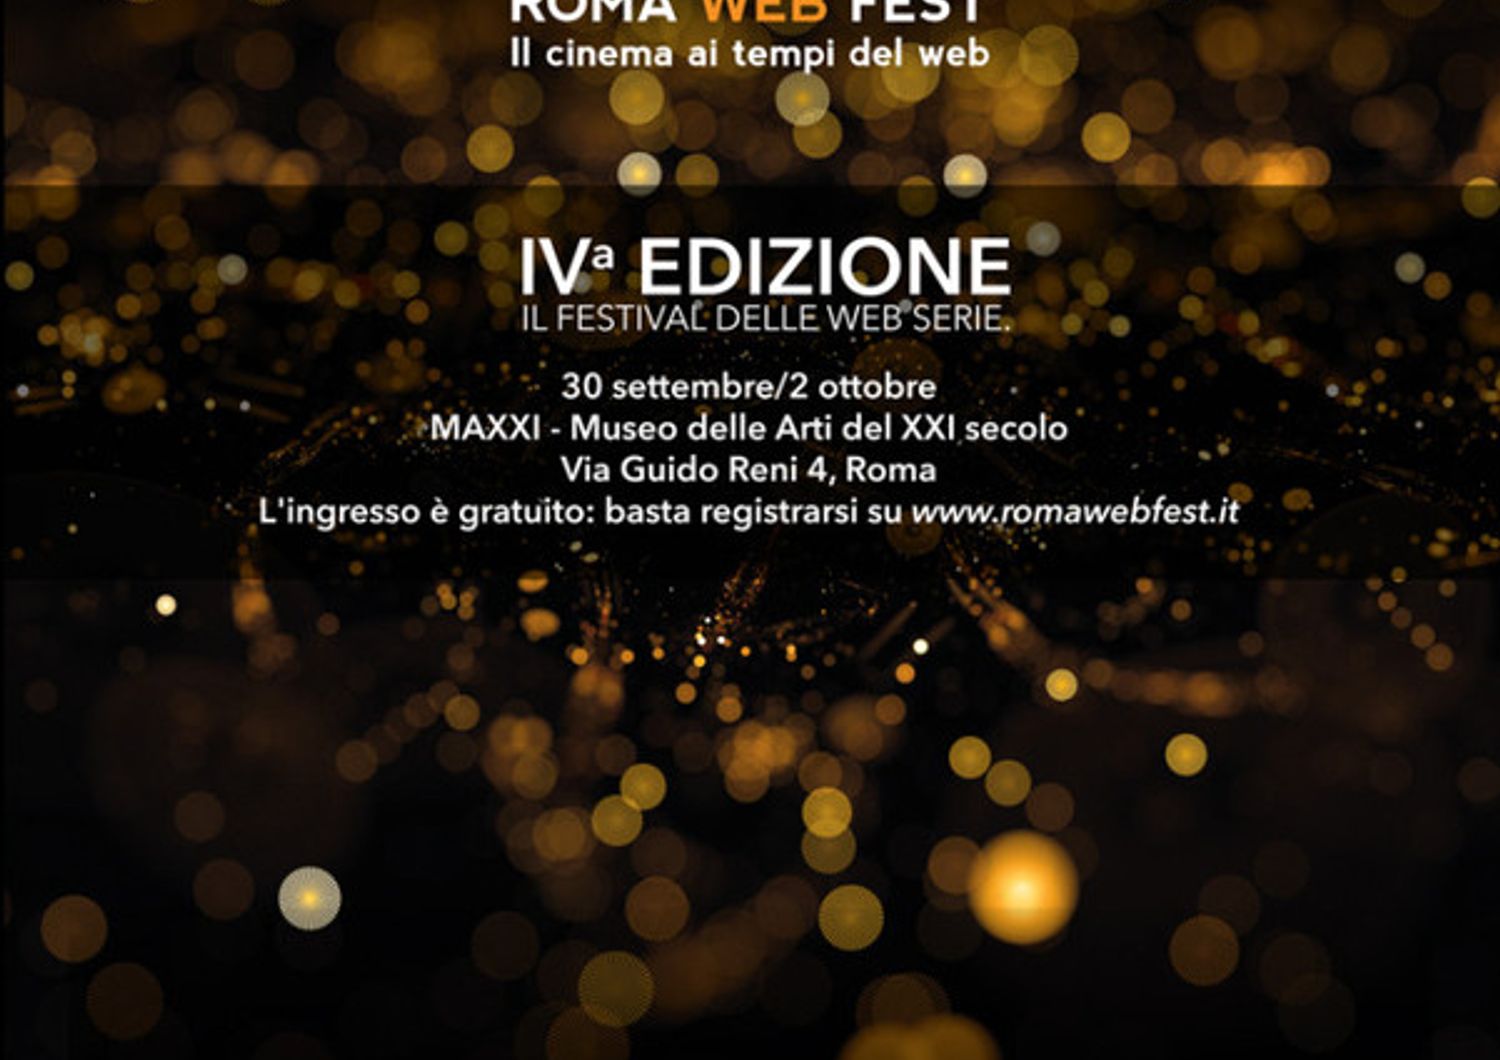 Locandina roma web fest (Francesco Russo)